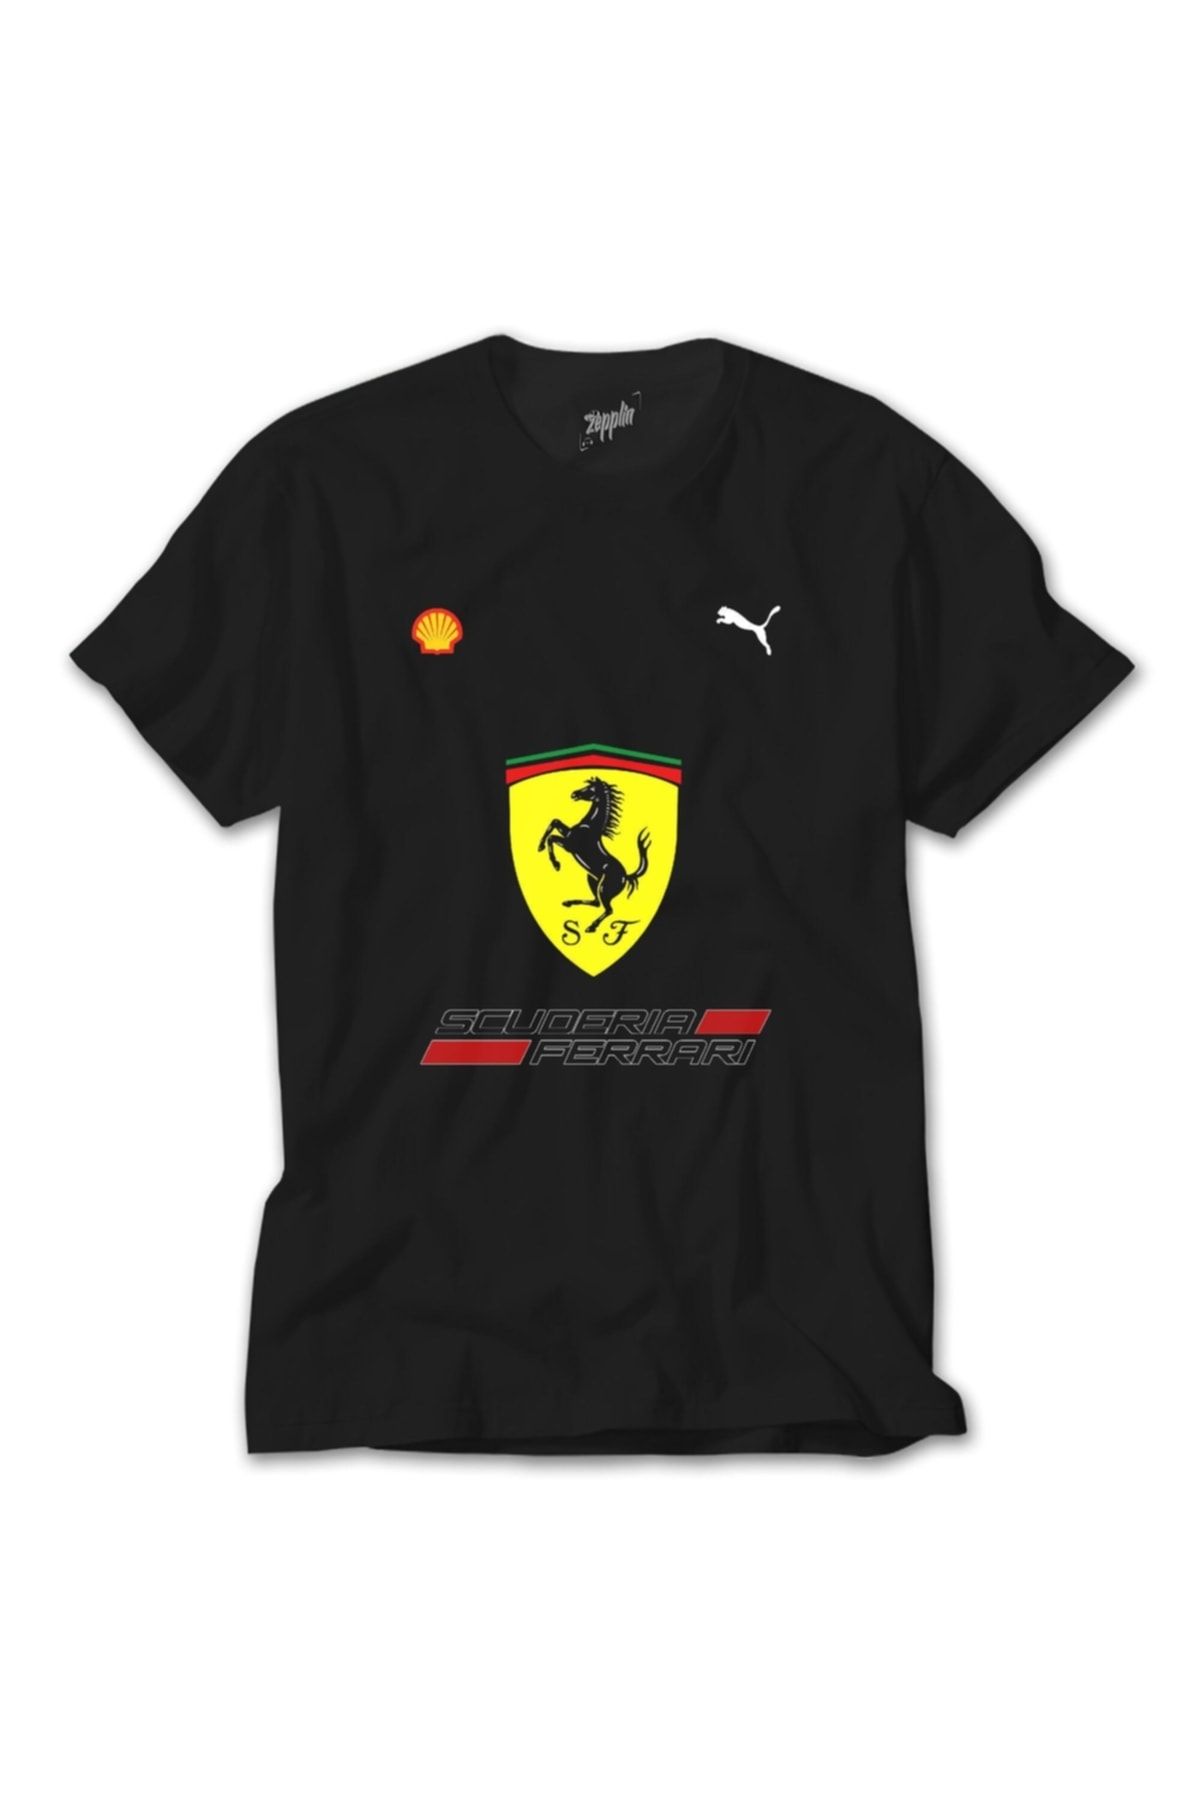 Z zepplin F1 Ferrari Siyah T-shirt